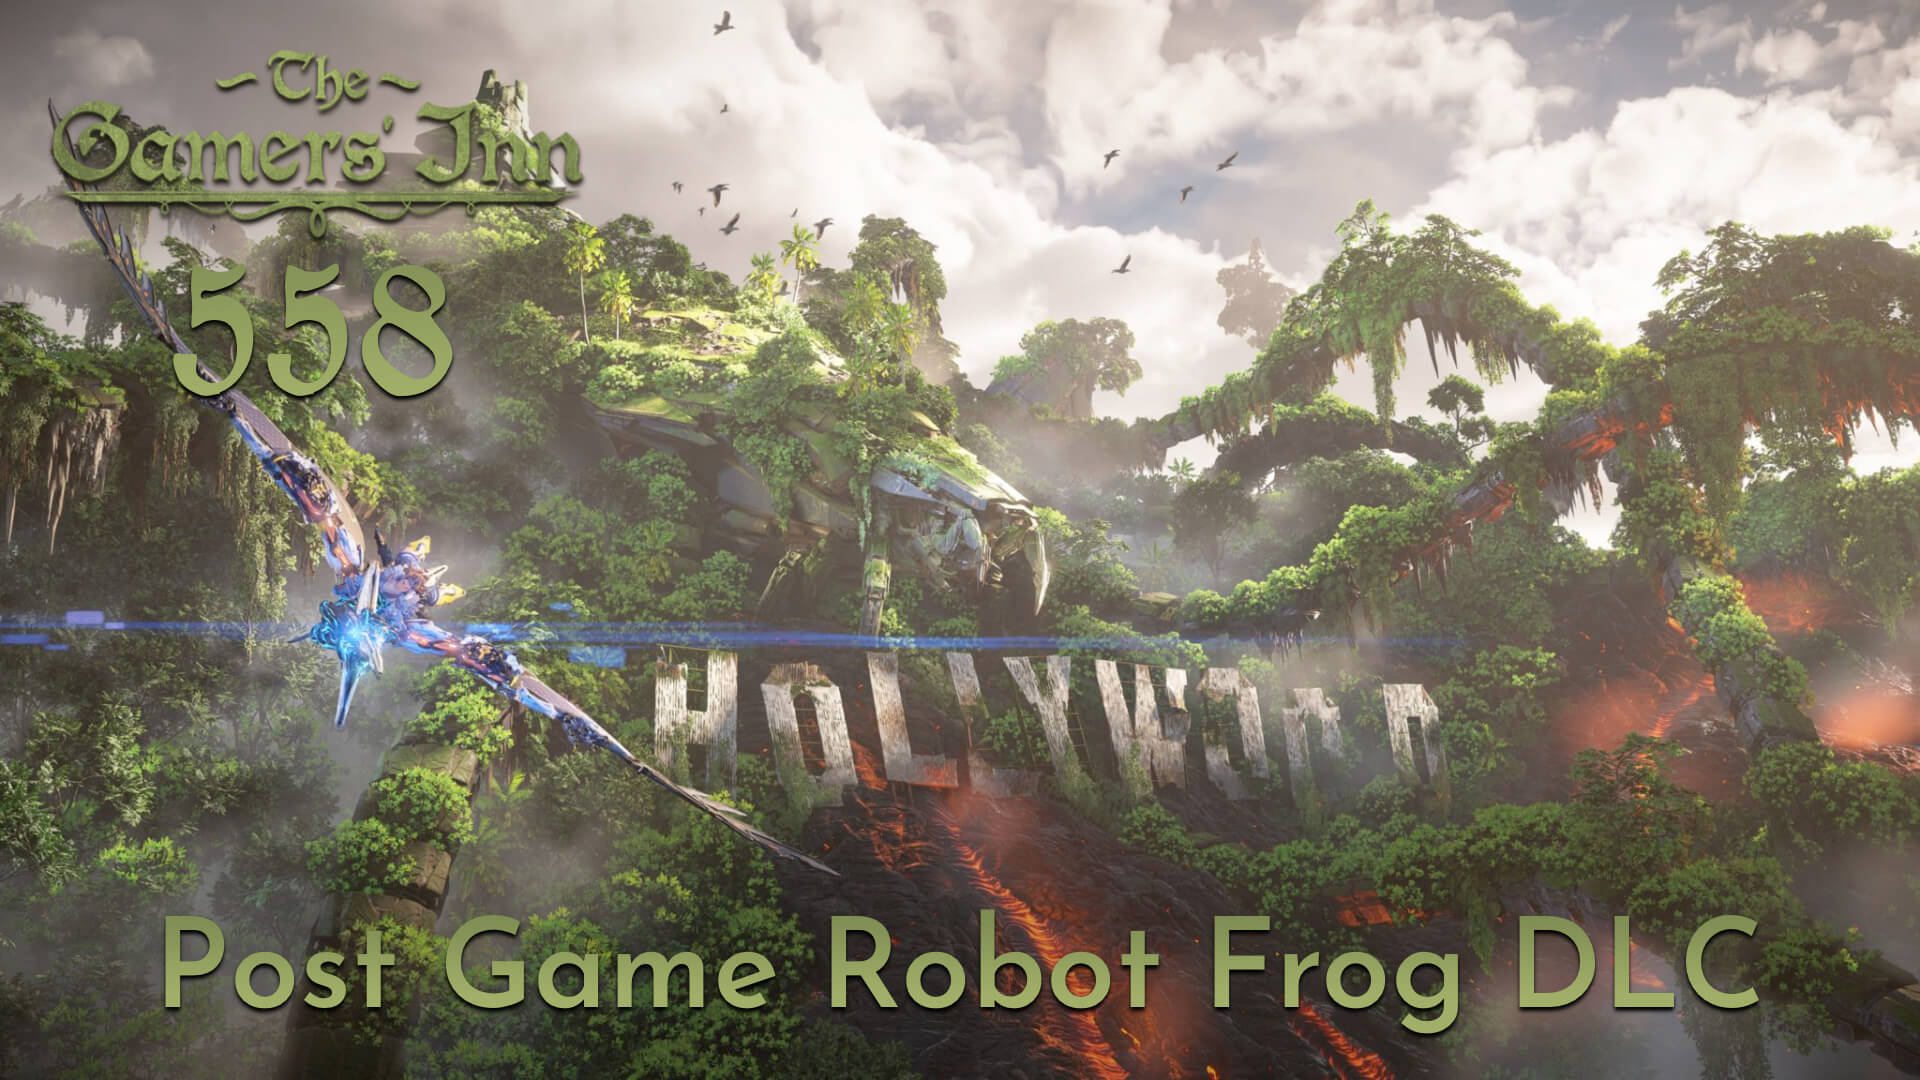 TGI 558 - Post Game Robot Frog DLC